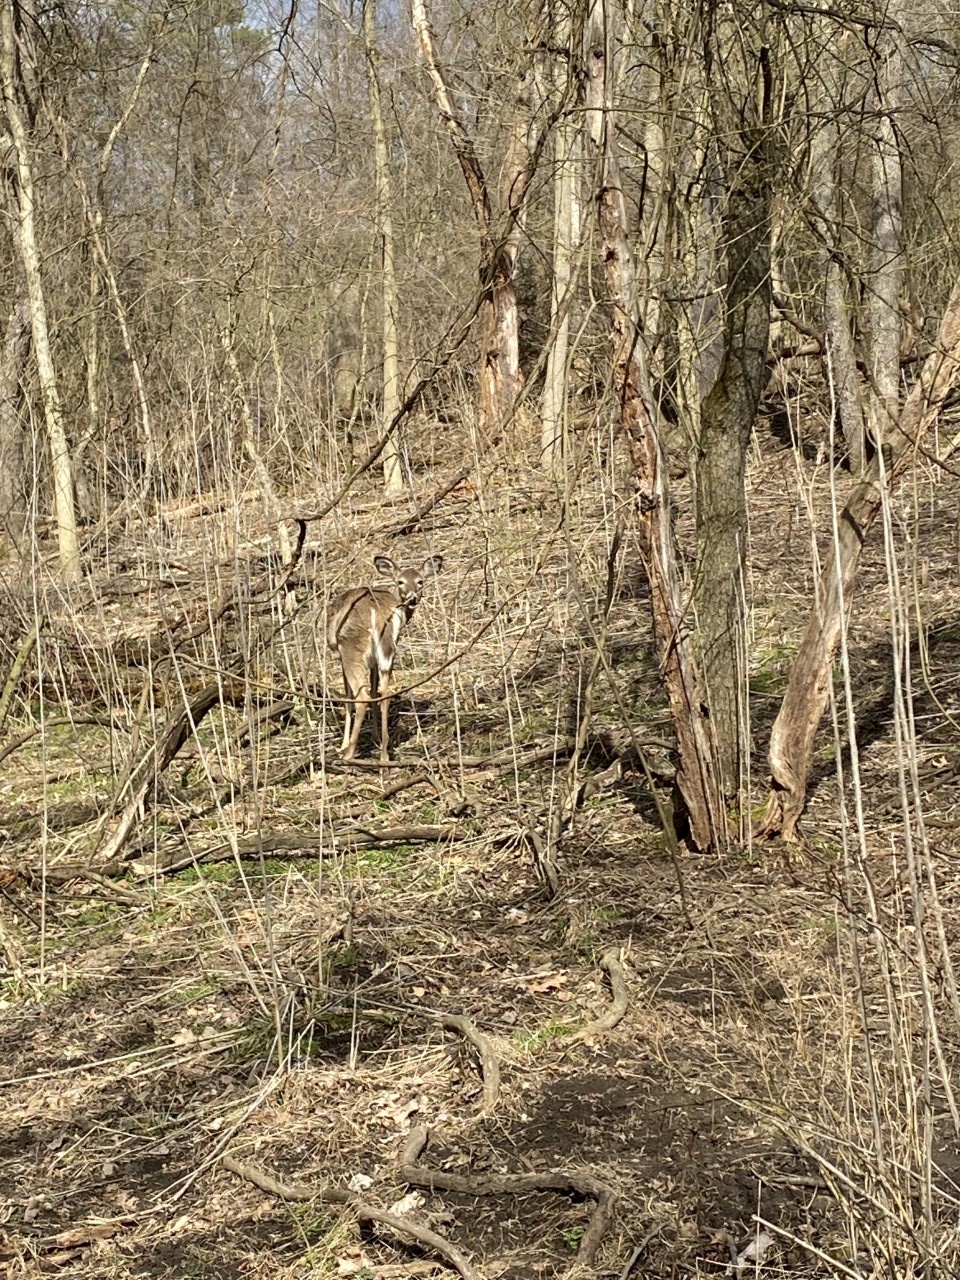 Deer in forest